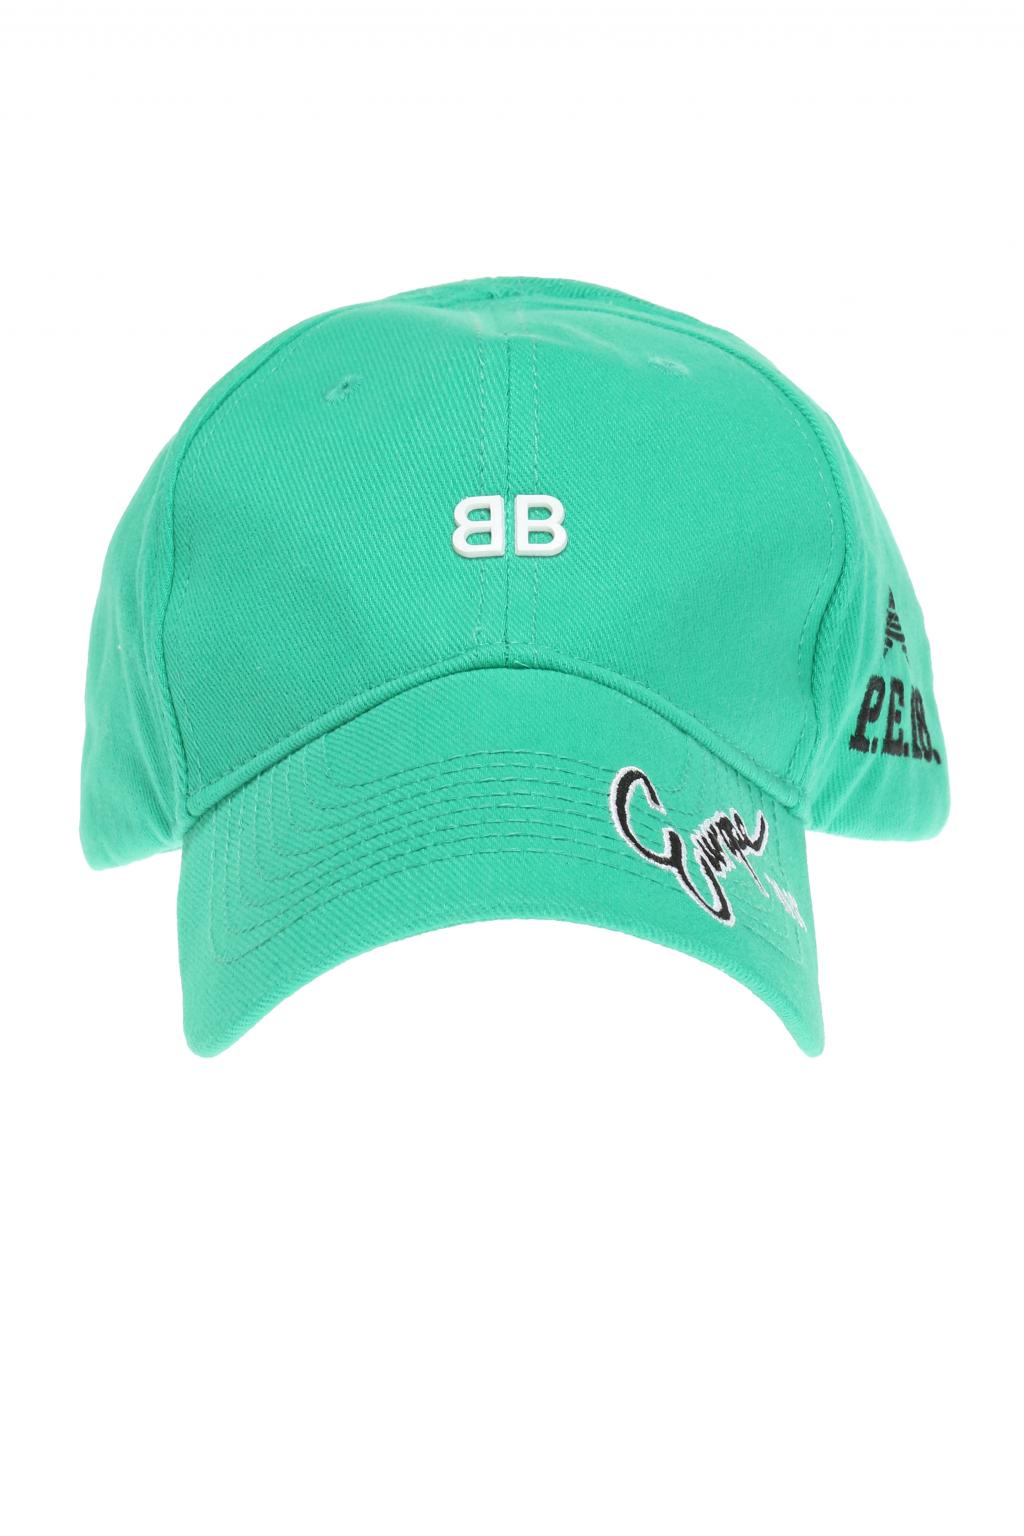 balenciaga green hat